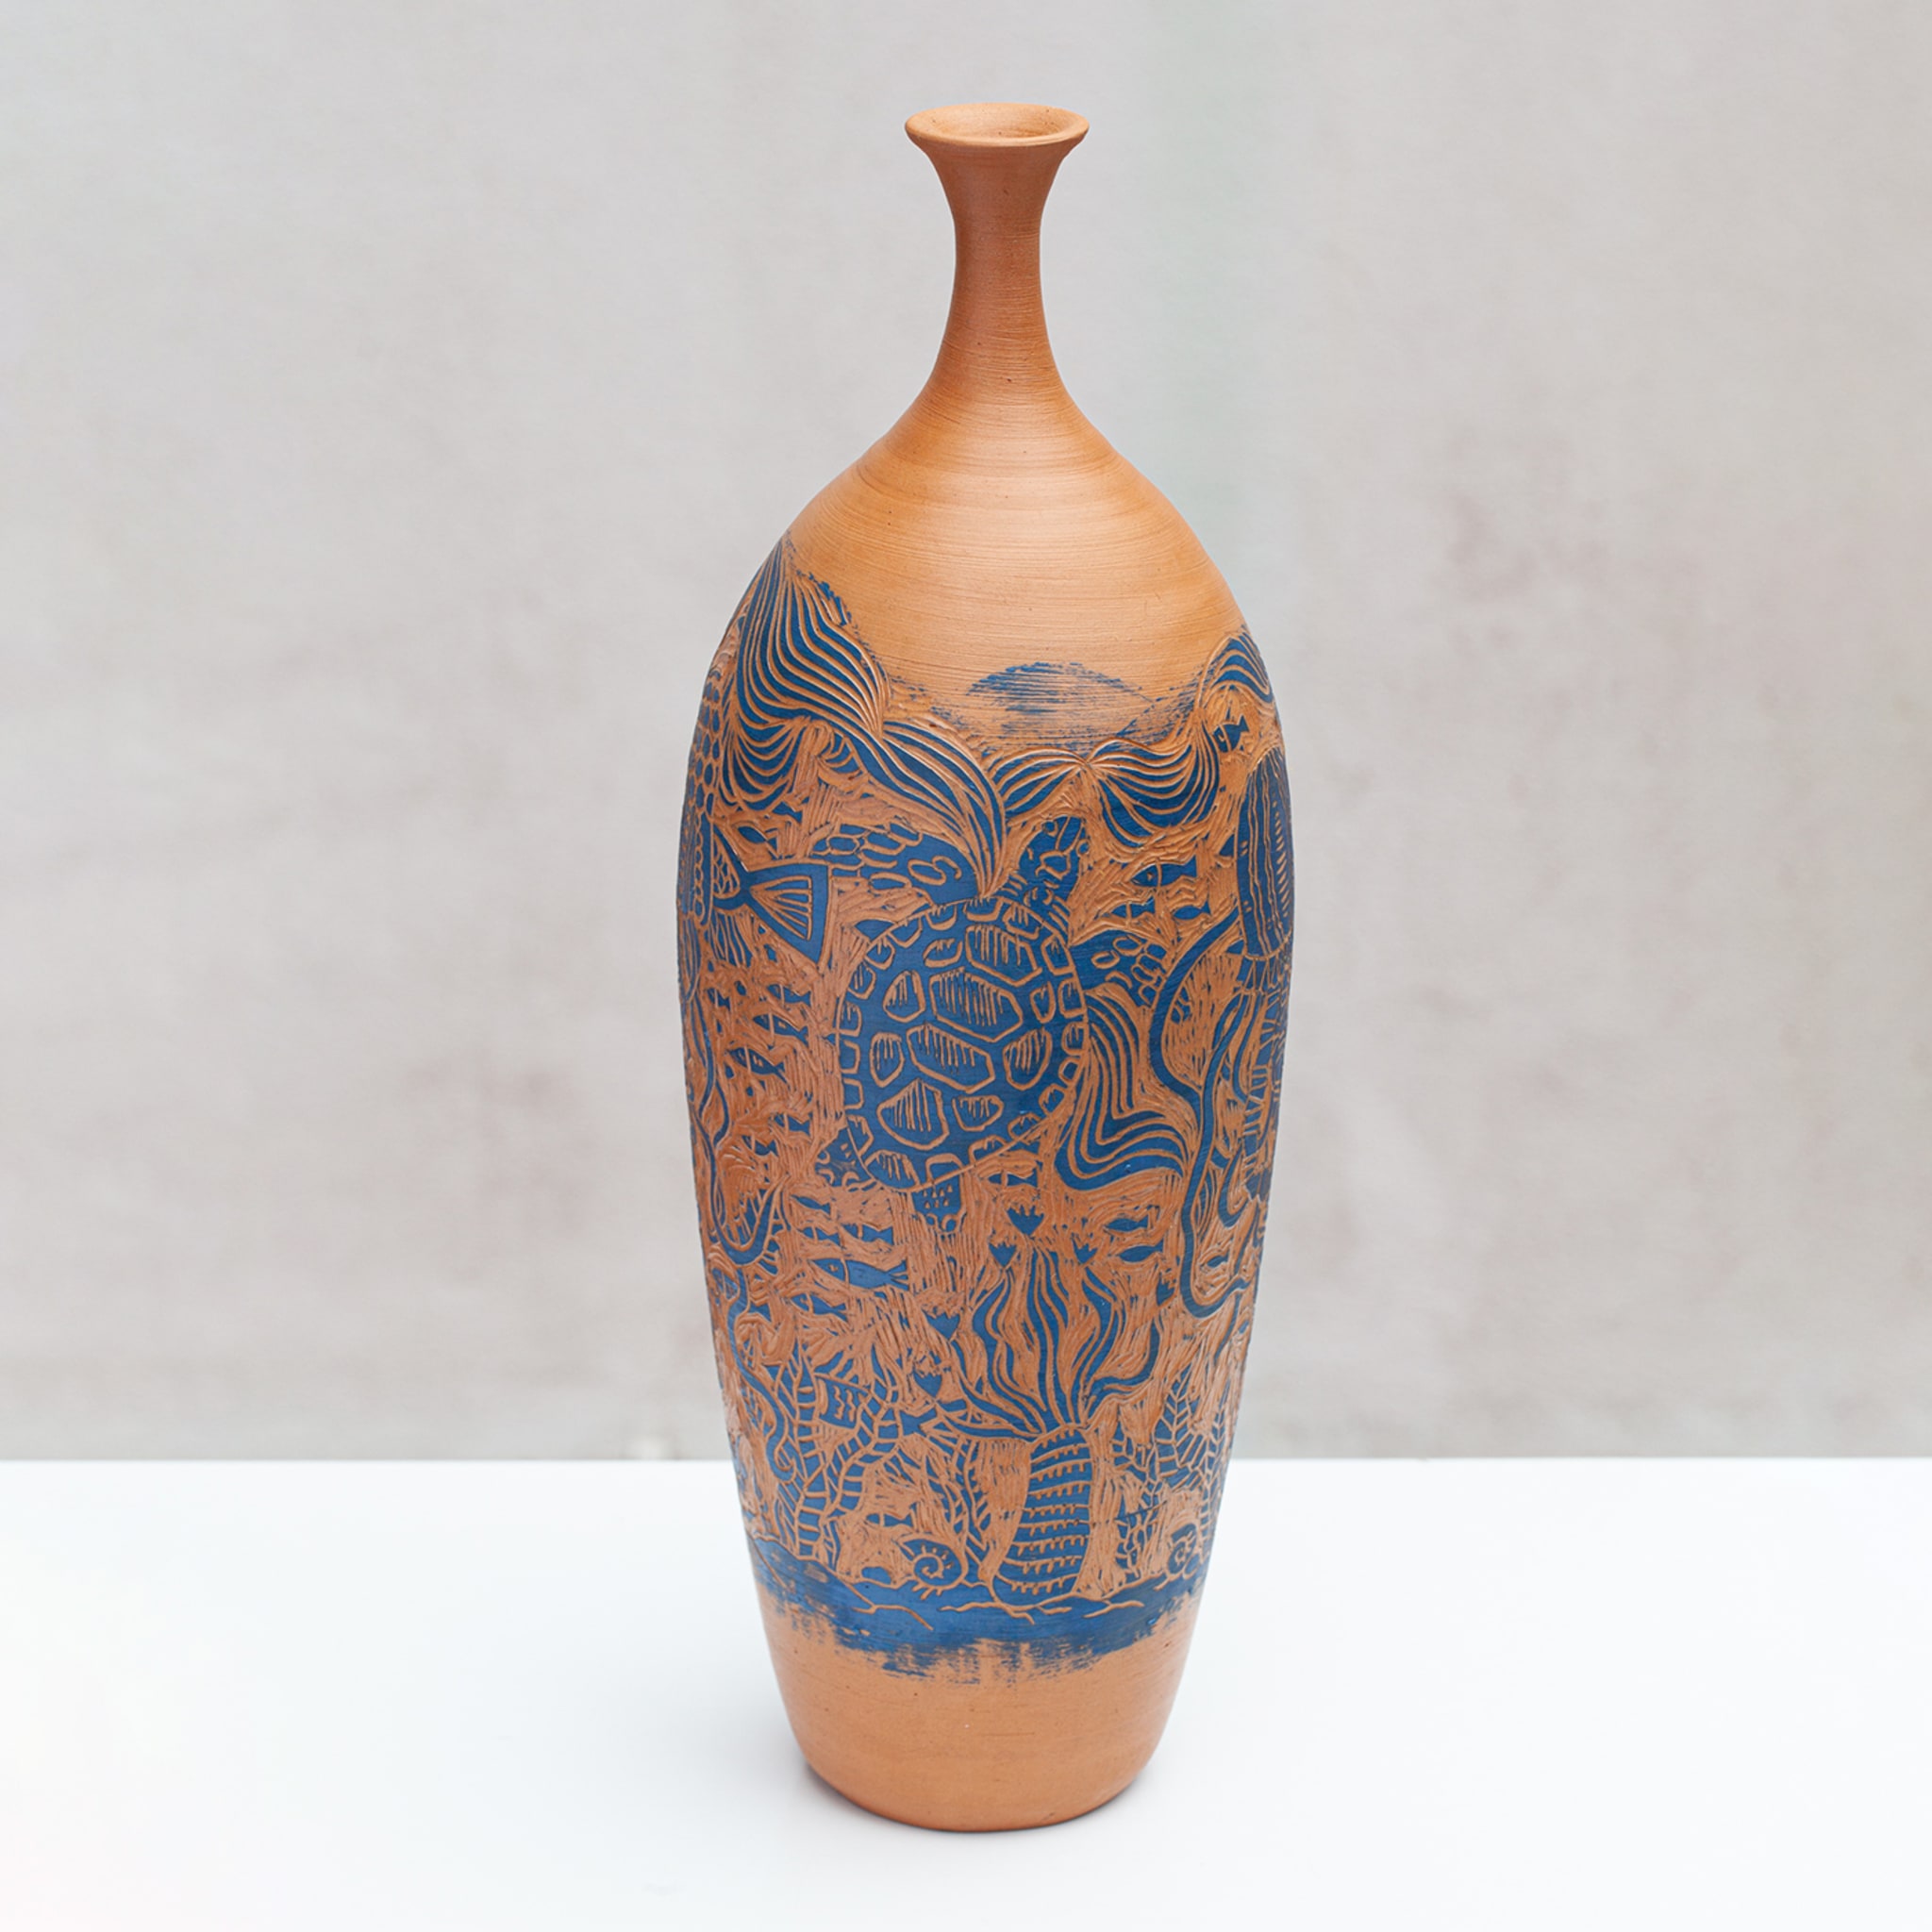 Ipnosi Siren Vase by Clara Holt and Chiara Zoppei - Alternative view 1